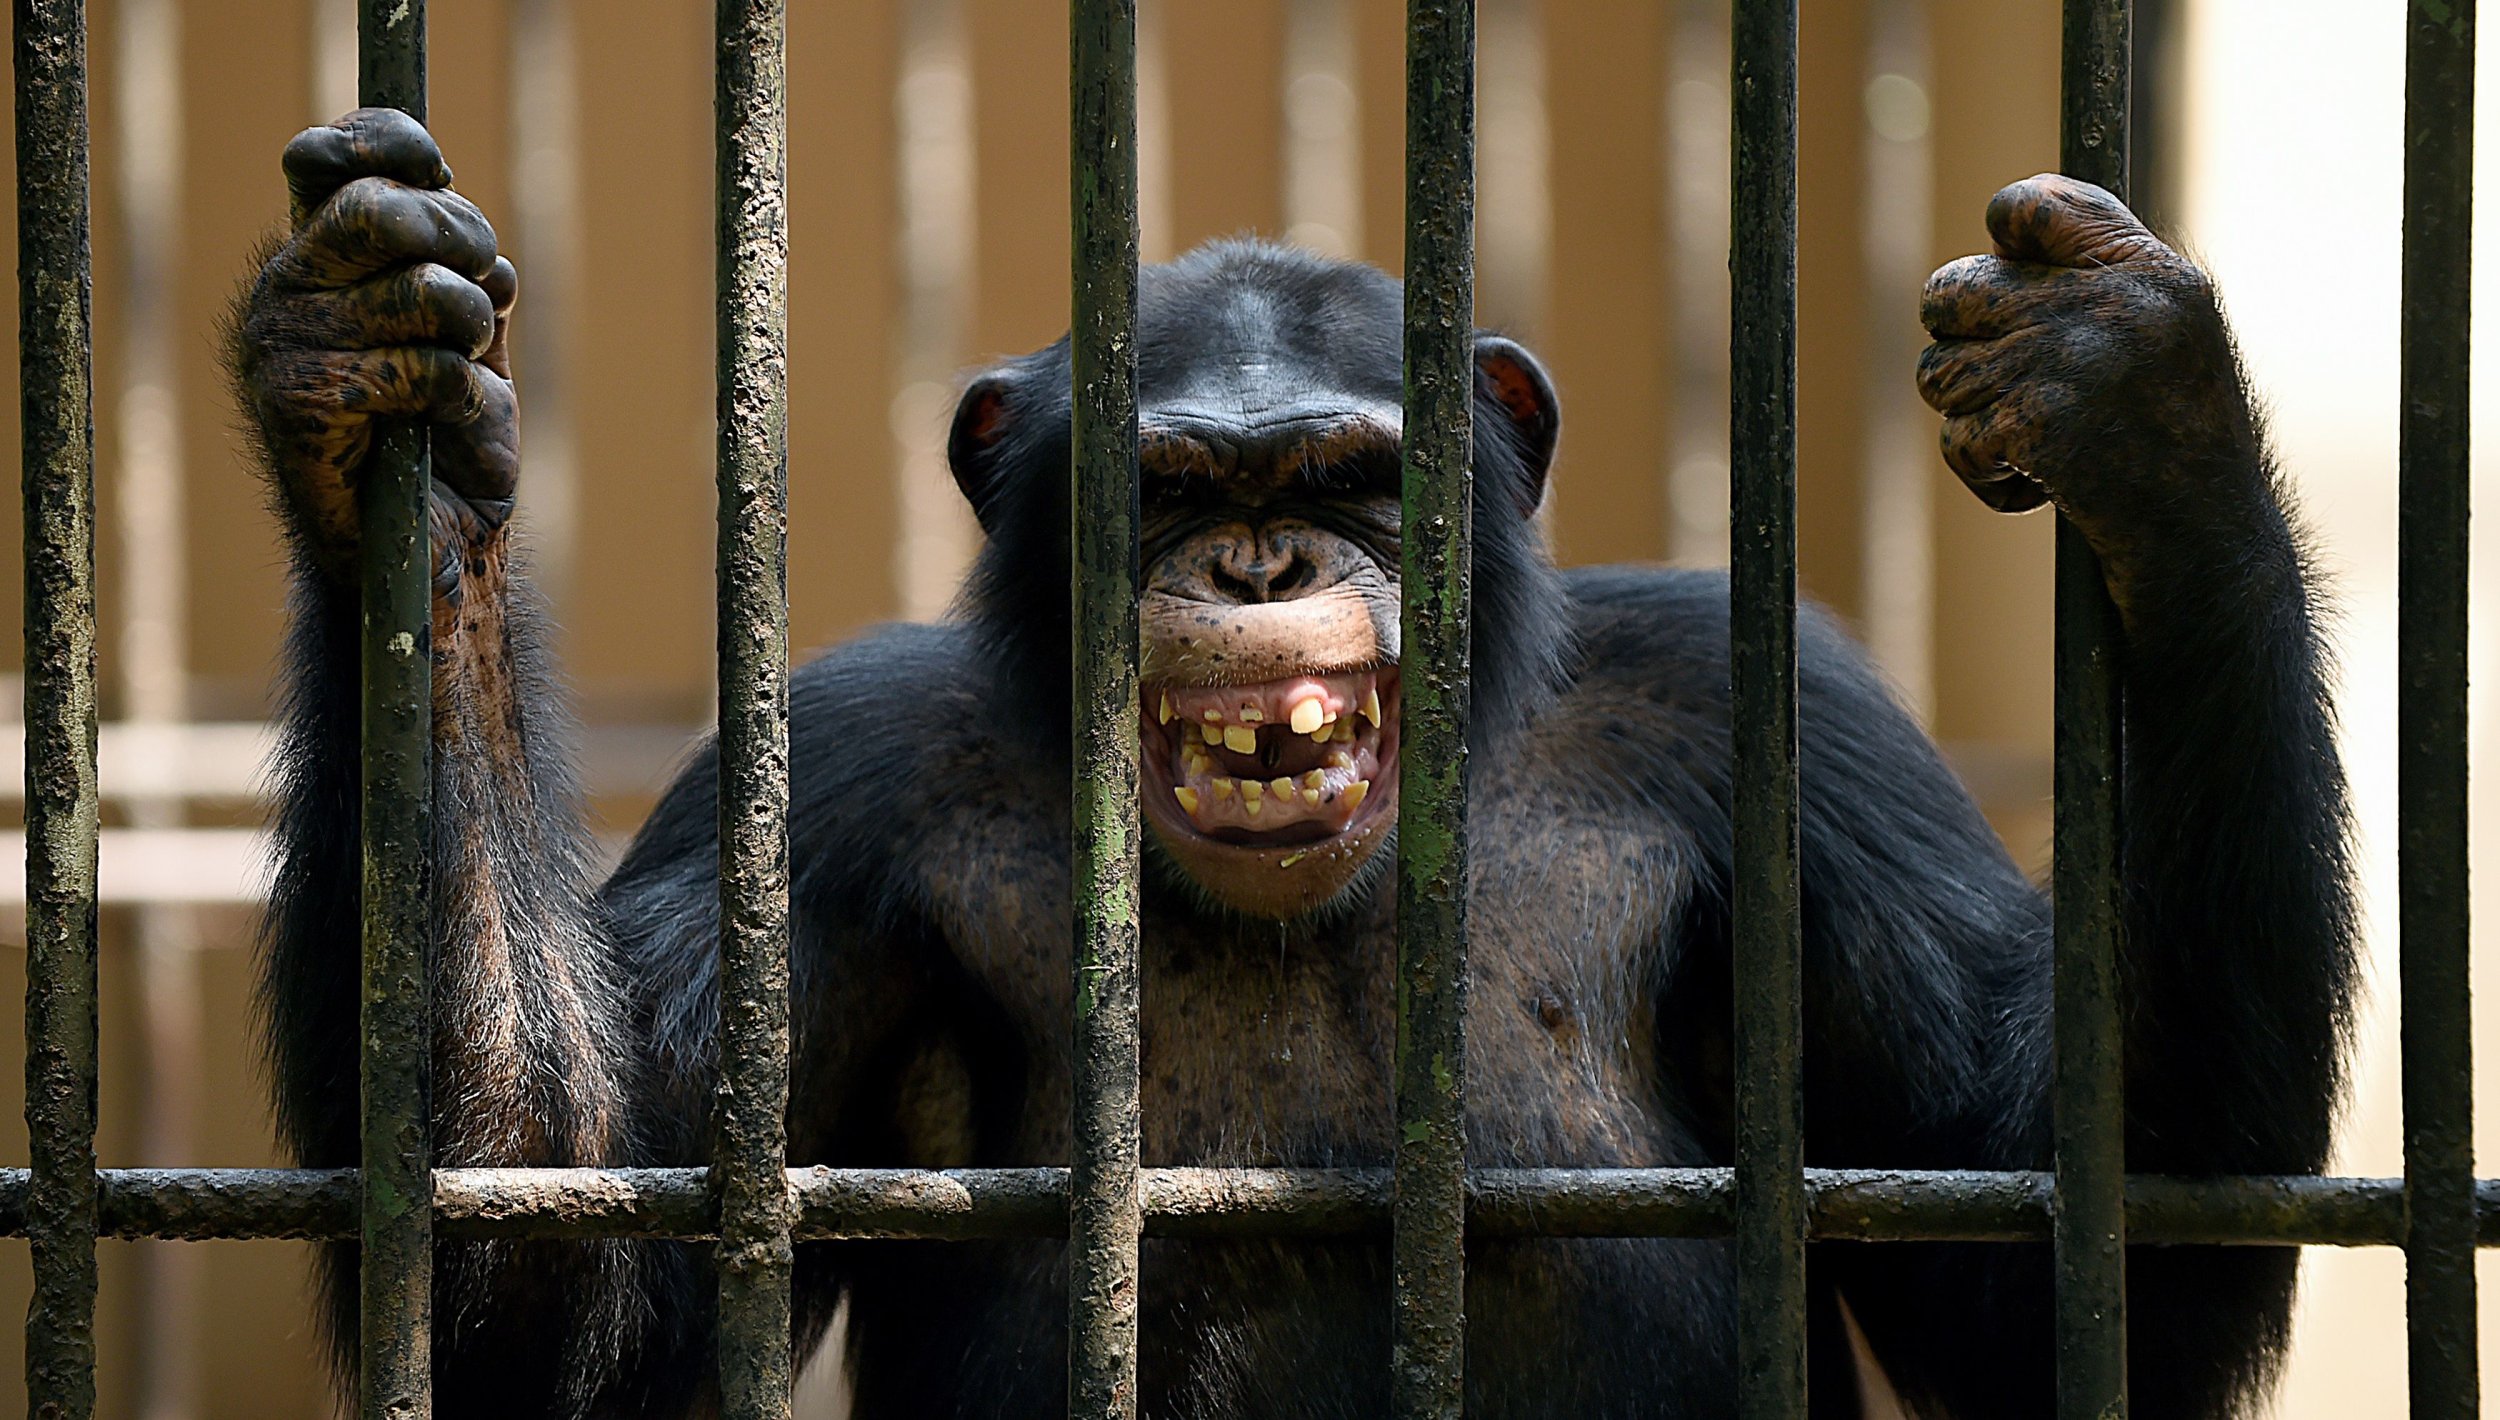 dna chimpanzee vs human